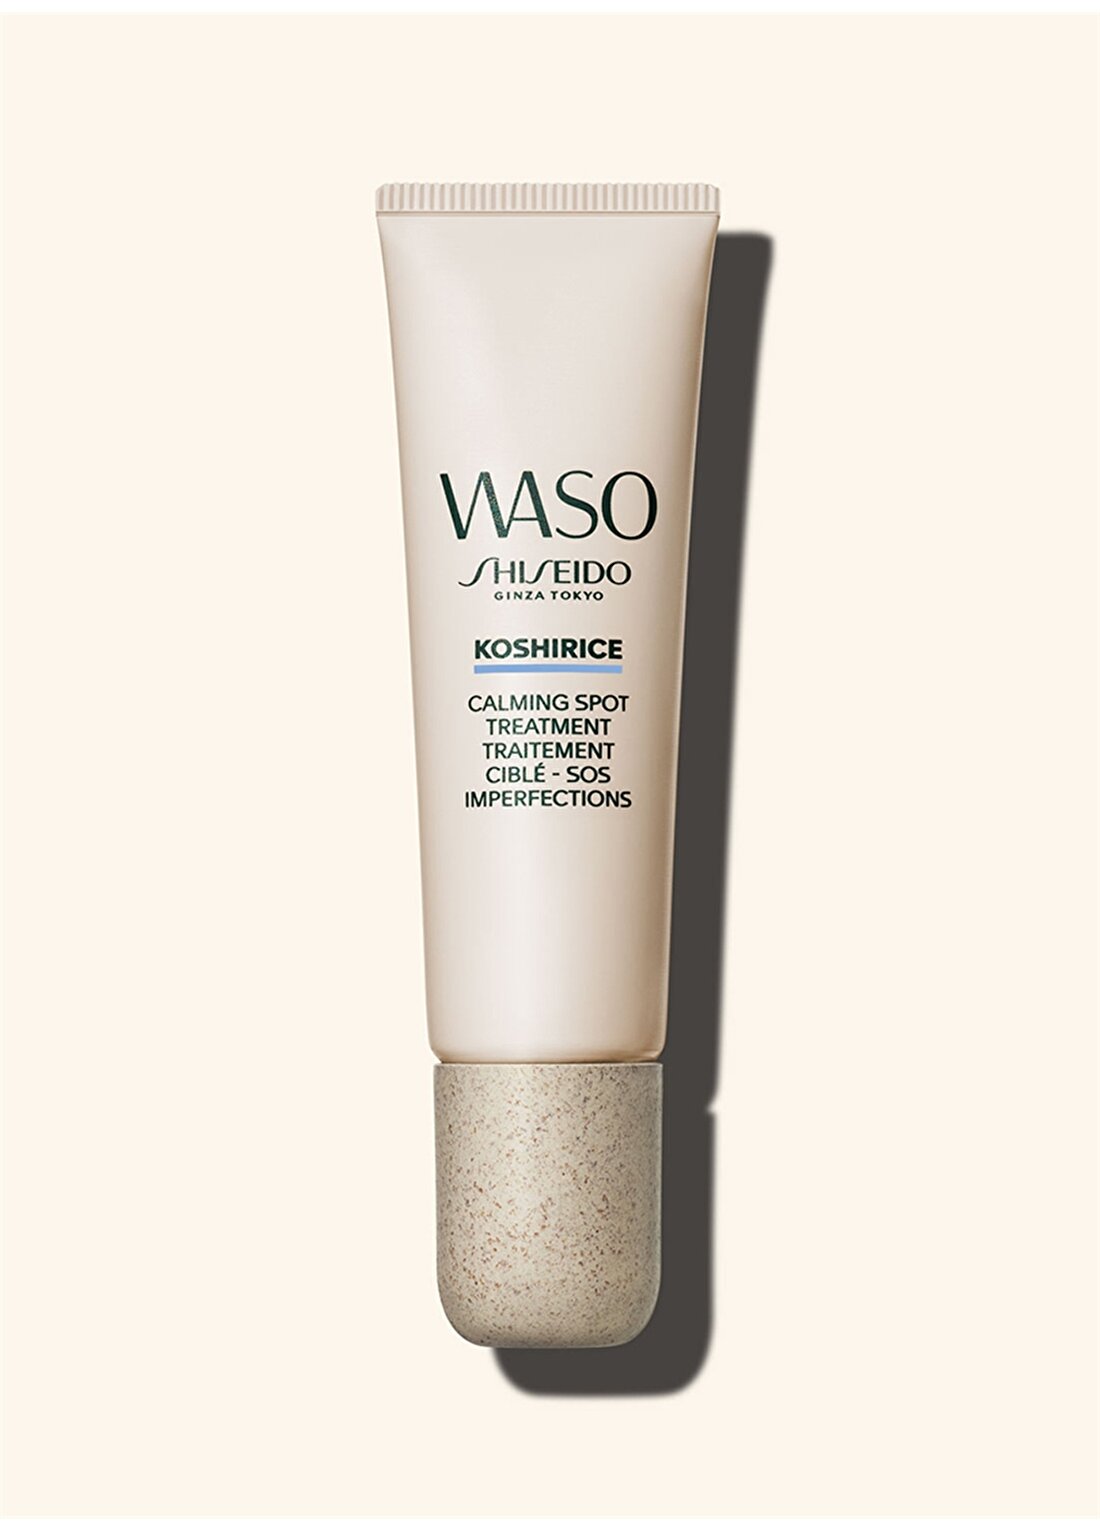 Shiseido Waso Koshırıce Calmıng Spot Treatment / Ferahlatıcı Sivilce Bakım Kremi